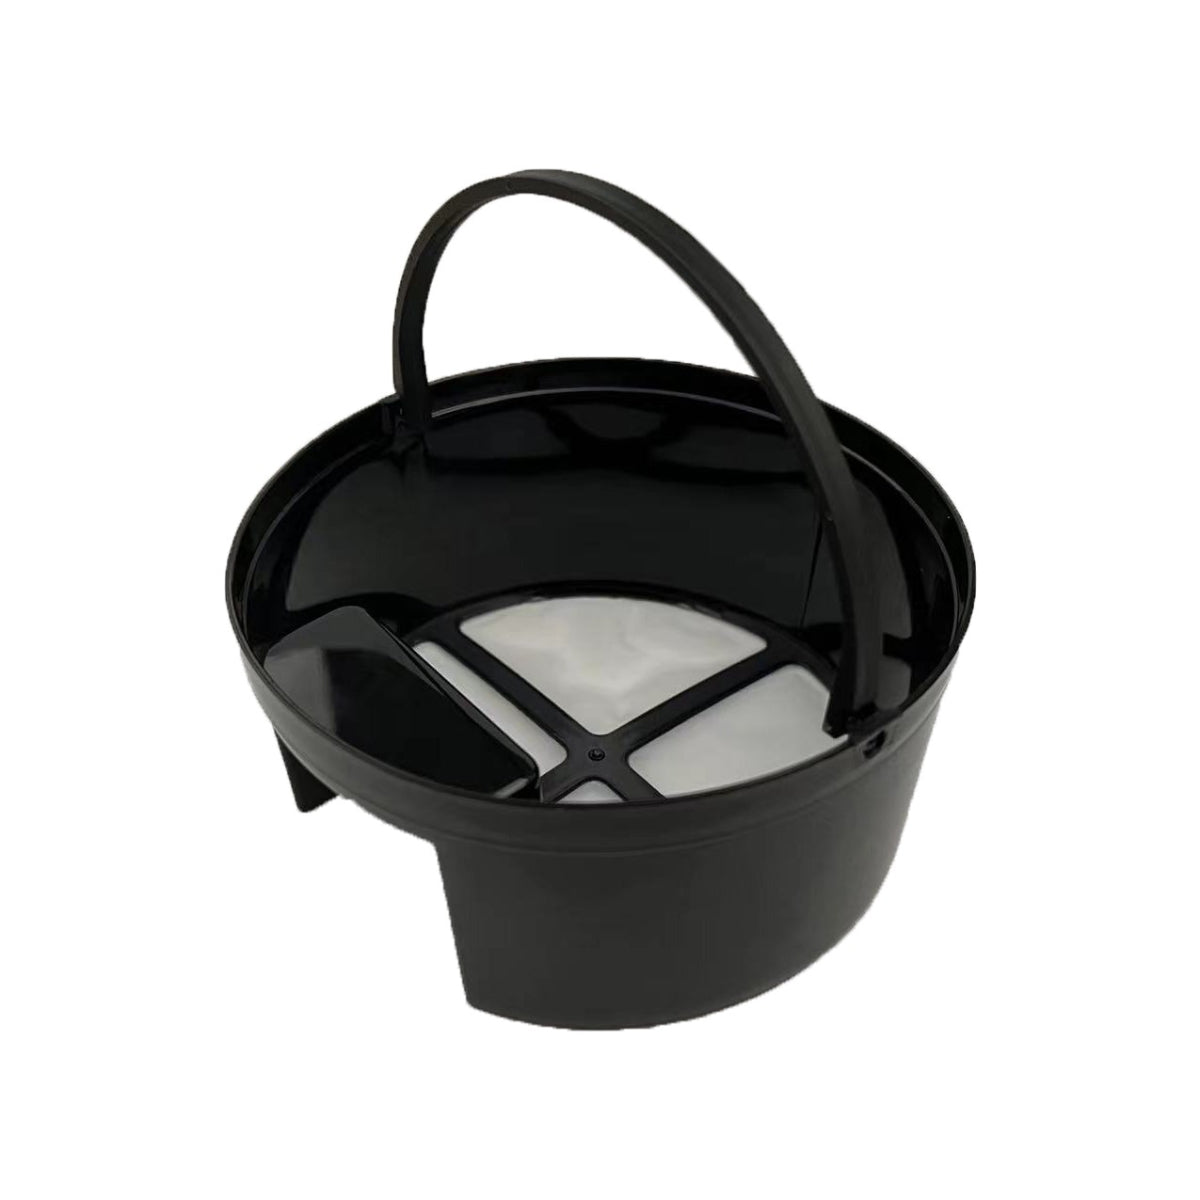 <img src="filter basket.jpg" alt="wirsh iced coffee maker filter basket"/>